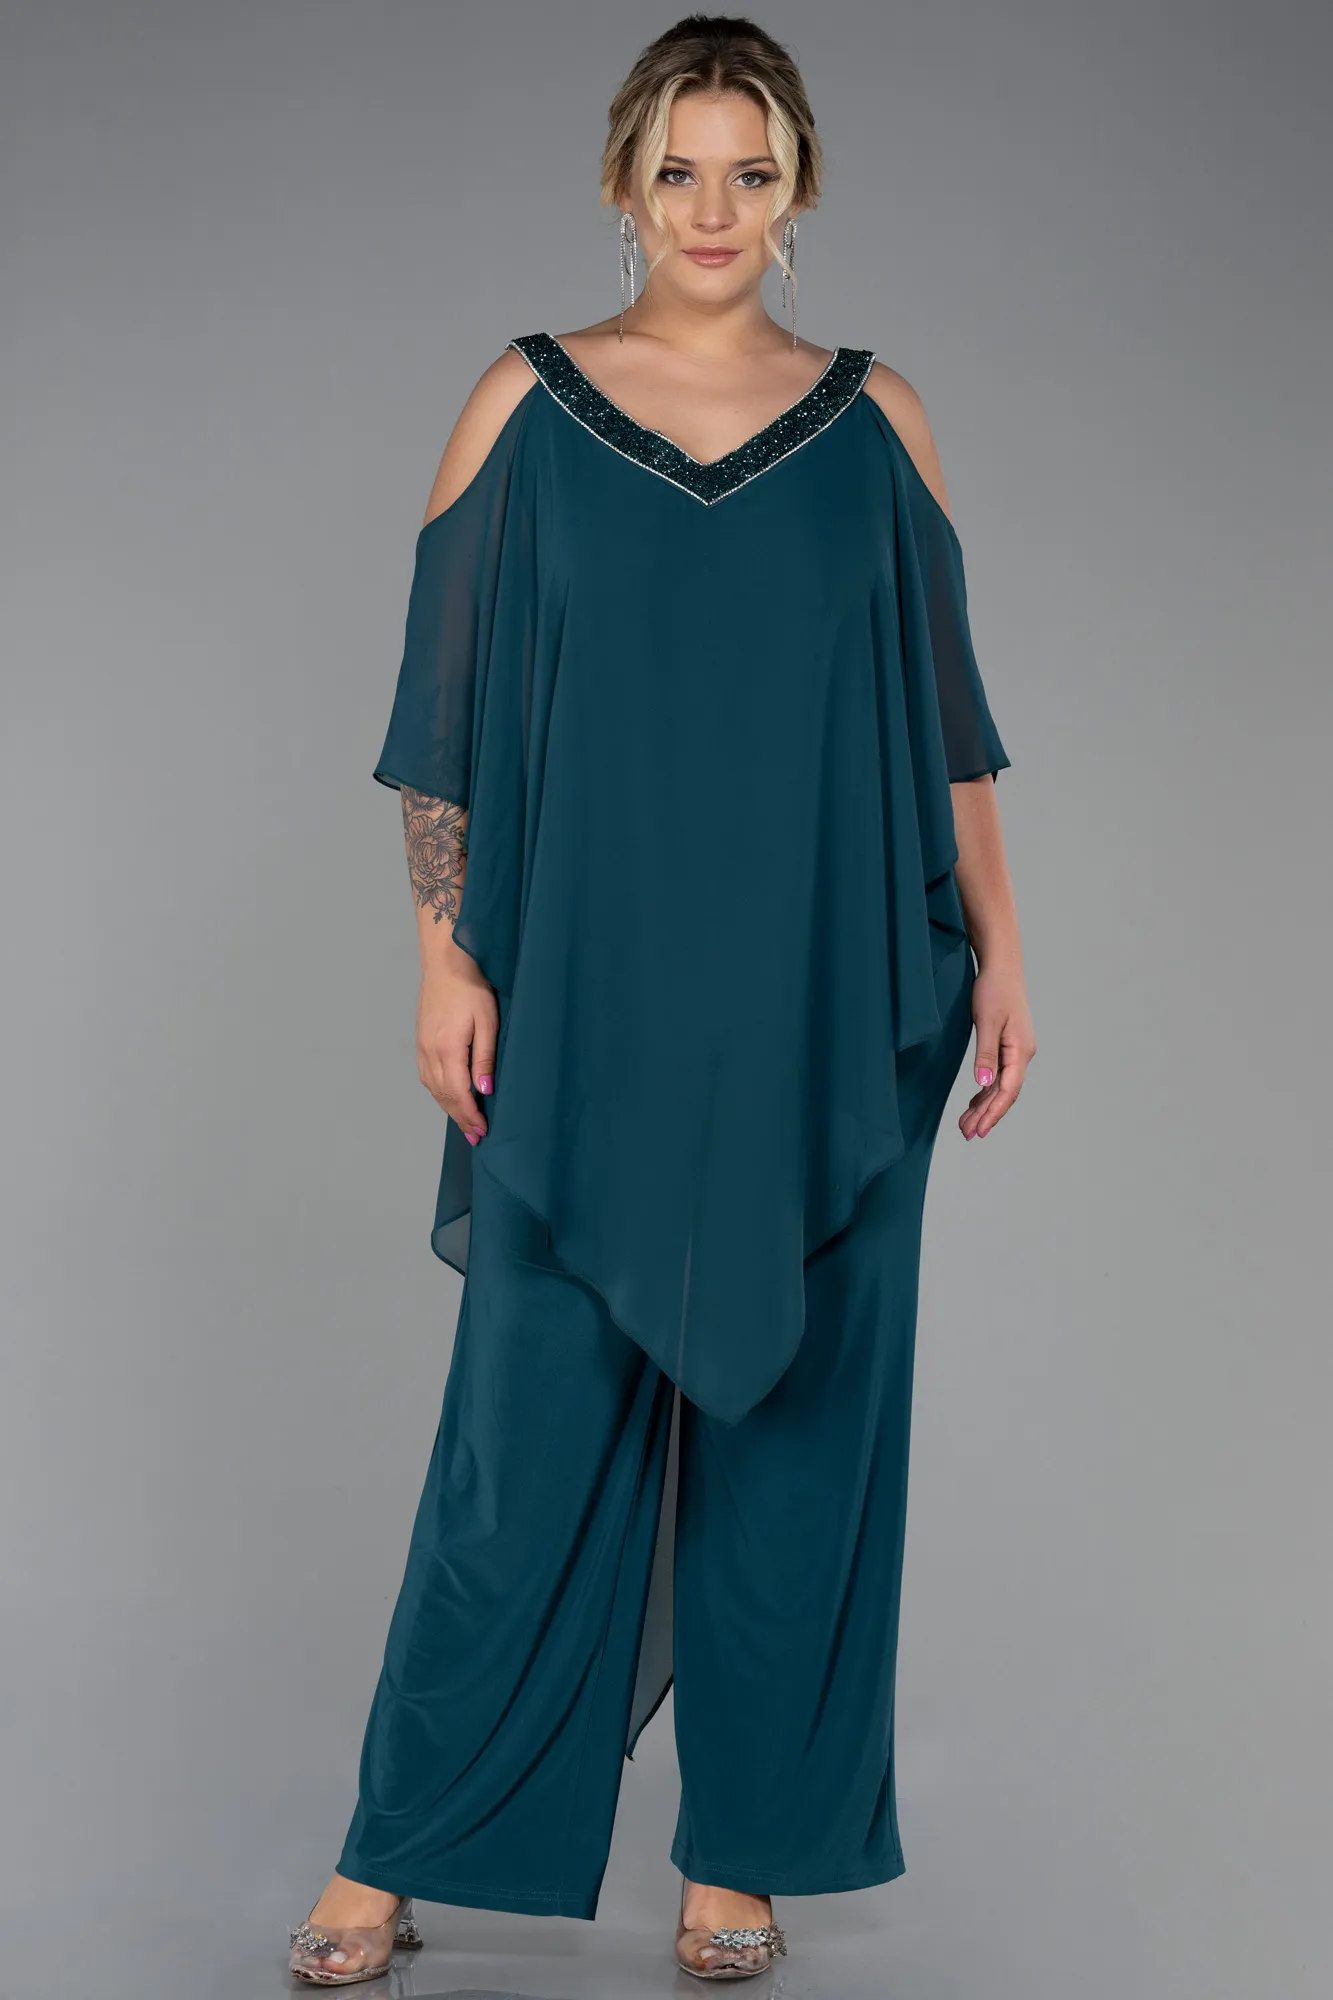 Emerald Green-Chiffon Plus Size Evening Dress ABT096